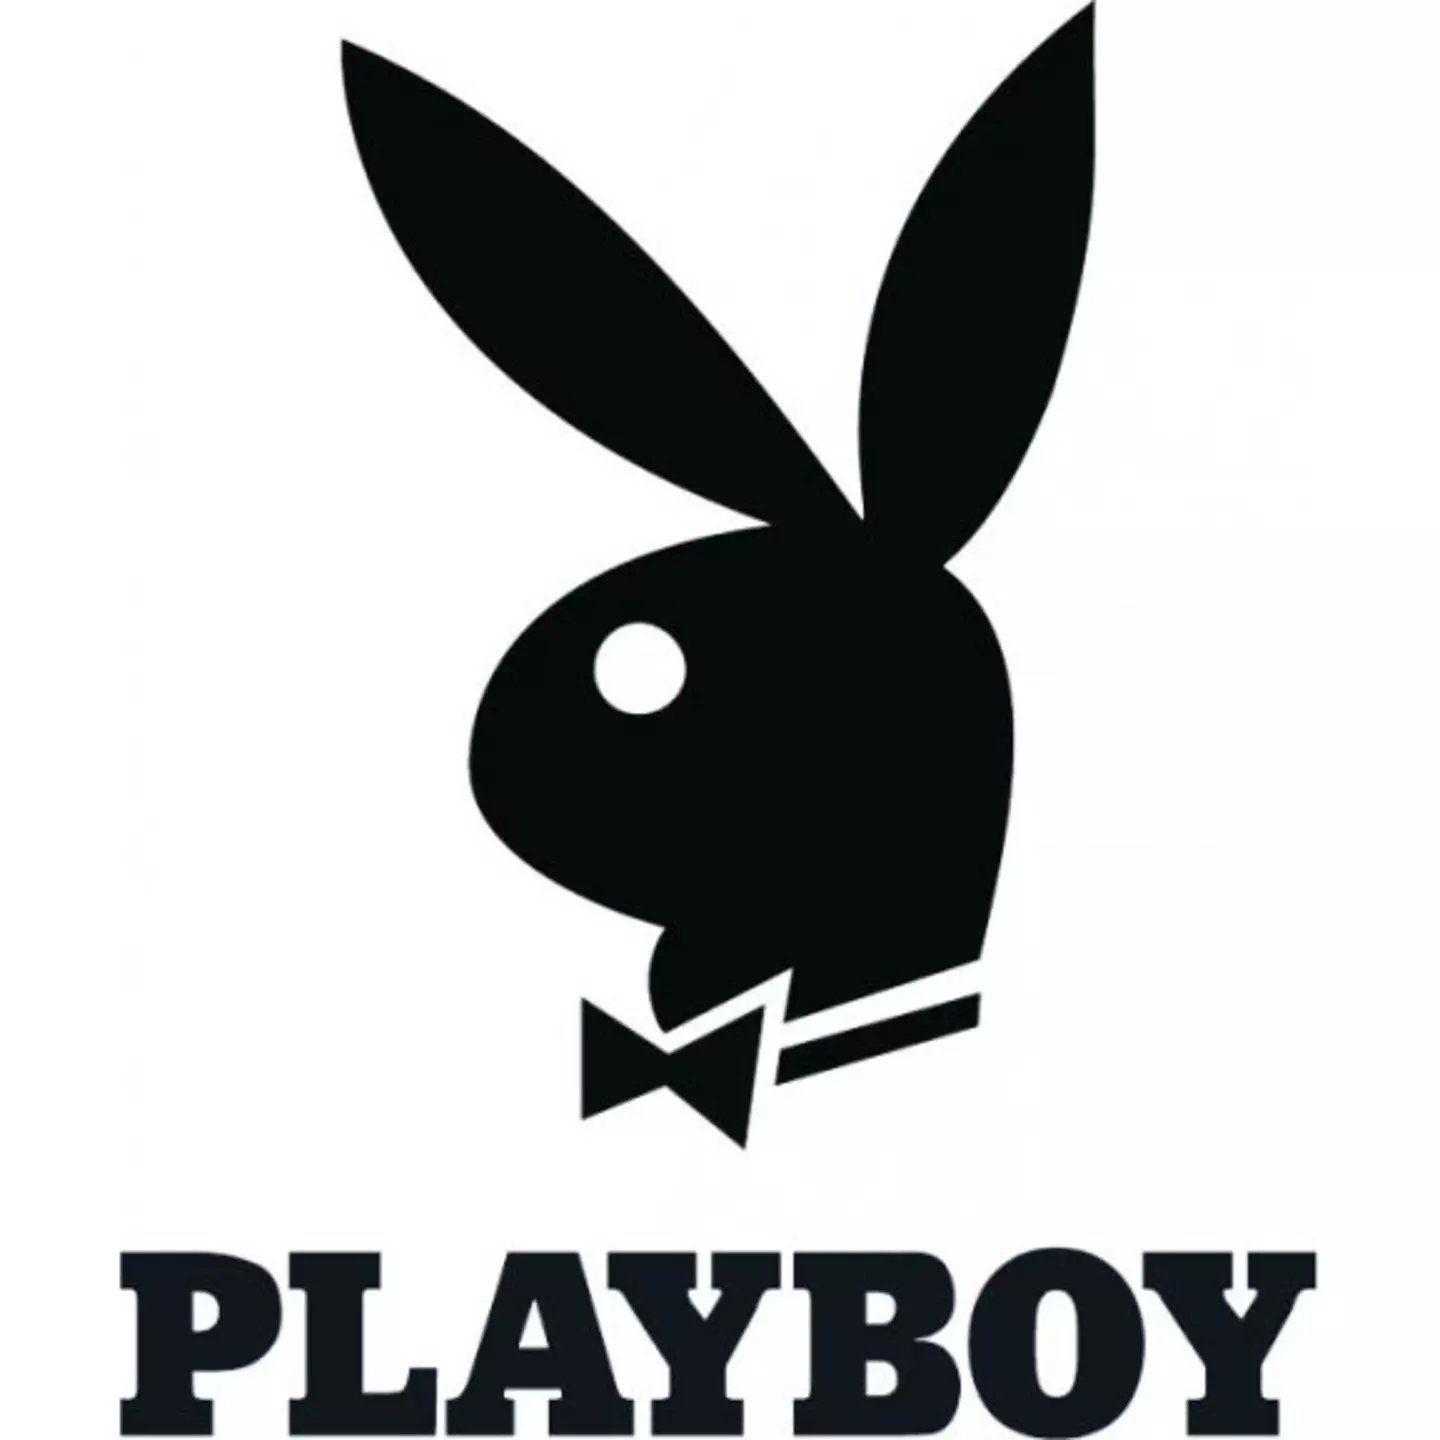 Playboy's rabbit logo is pretty iconic.